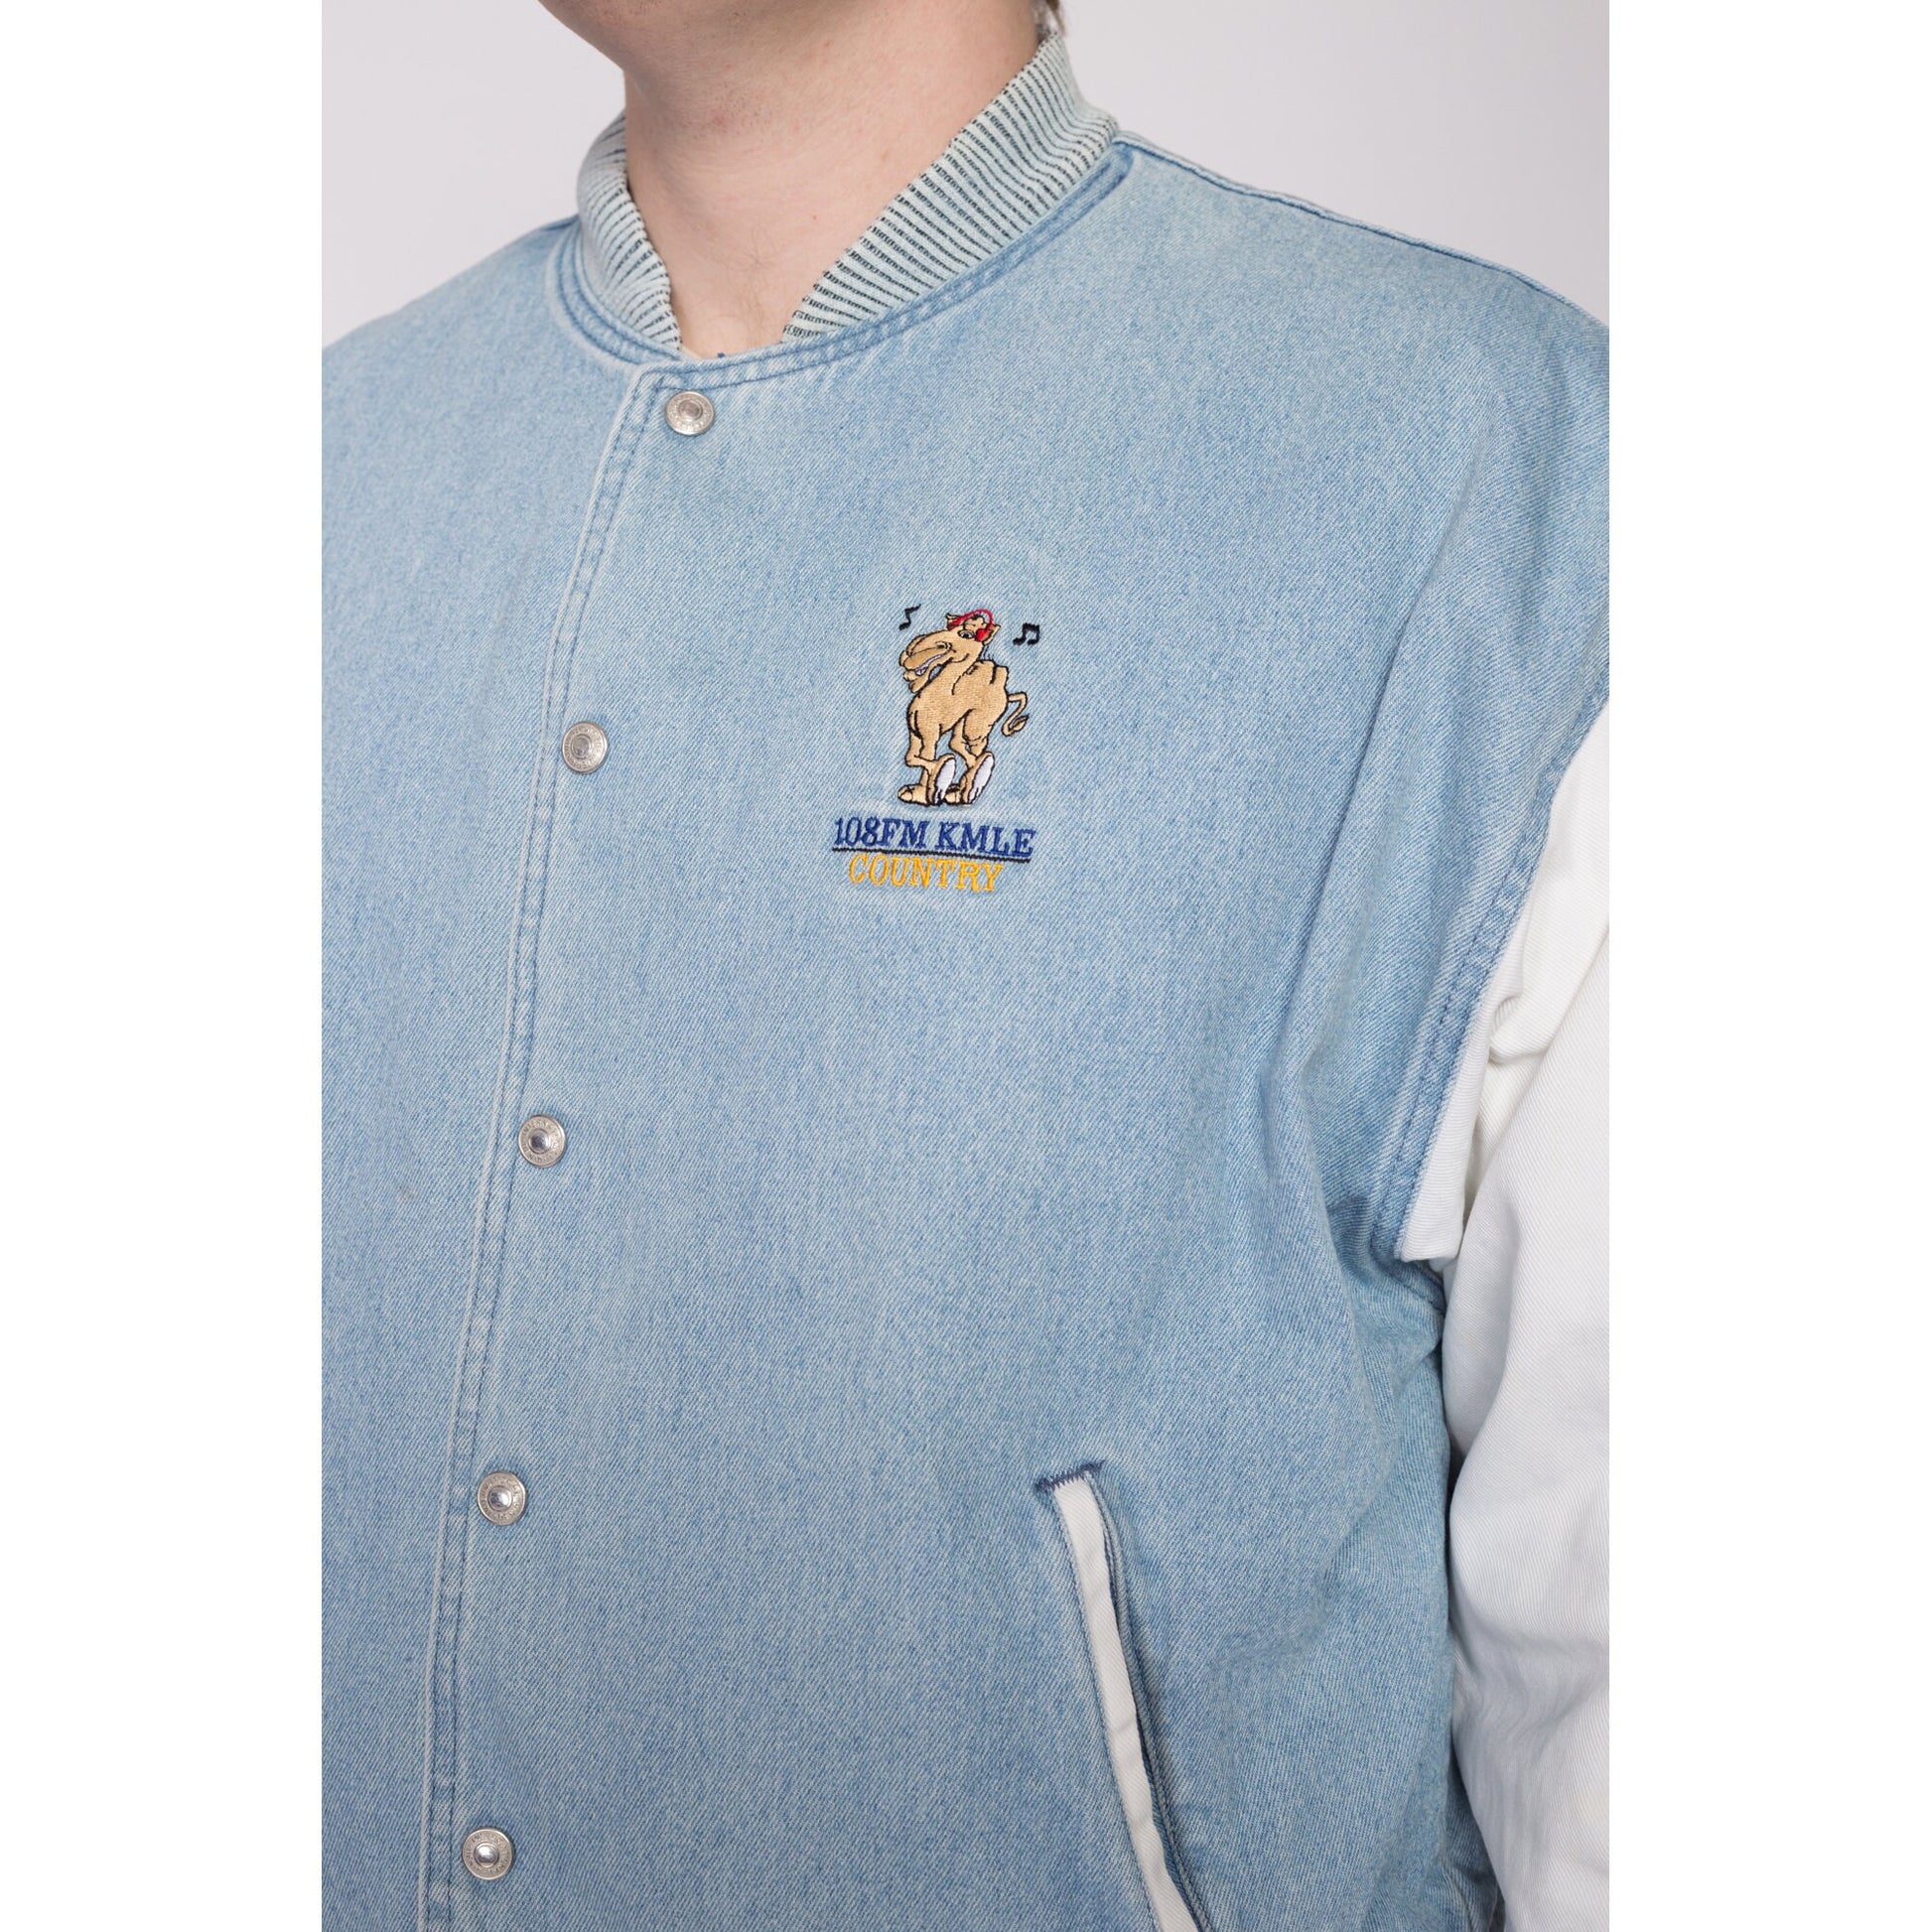 Vintage 108 FM KMLE Country Music Station Denim Jacket - Men's XL | 90s Baseball Style Snap Up Lightweight Jean Varsity Coat